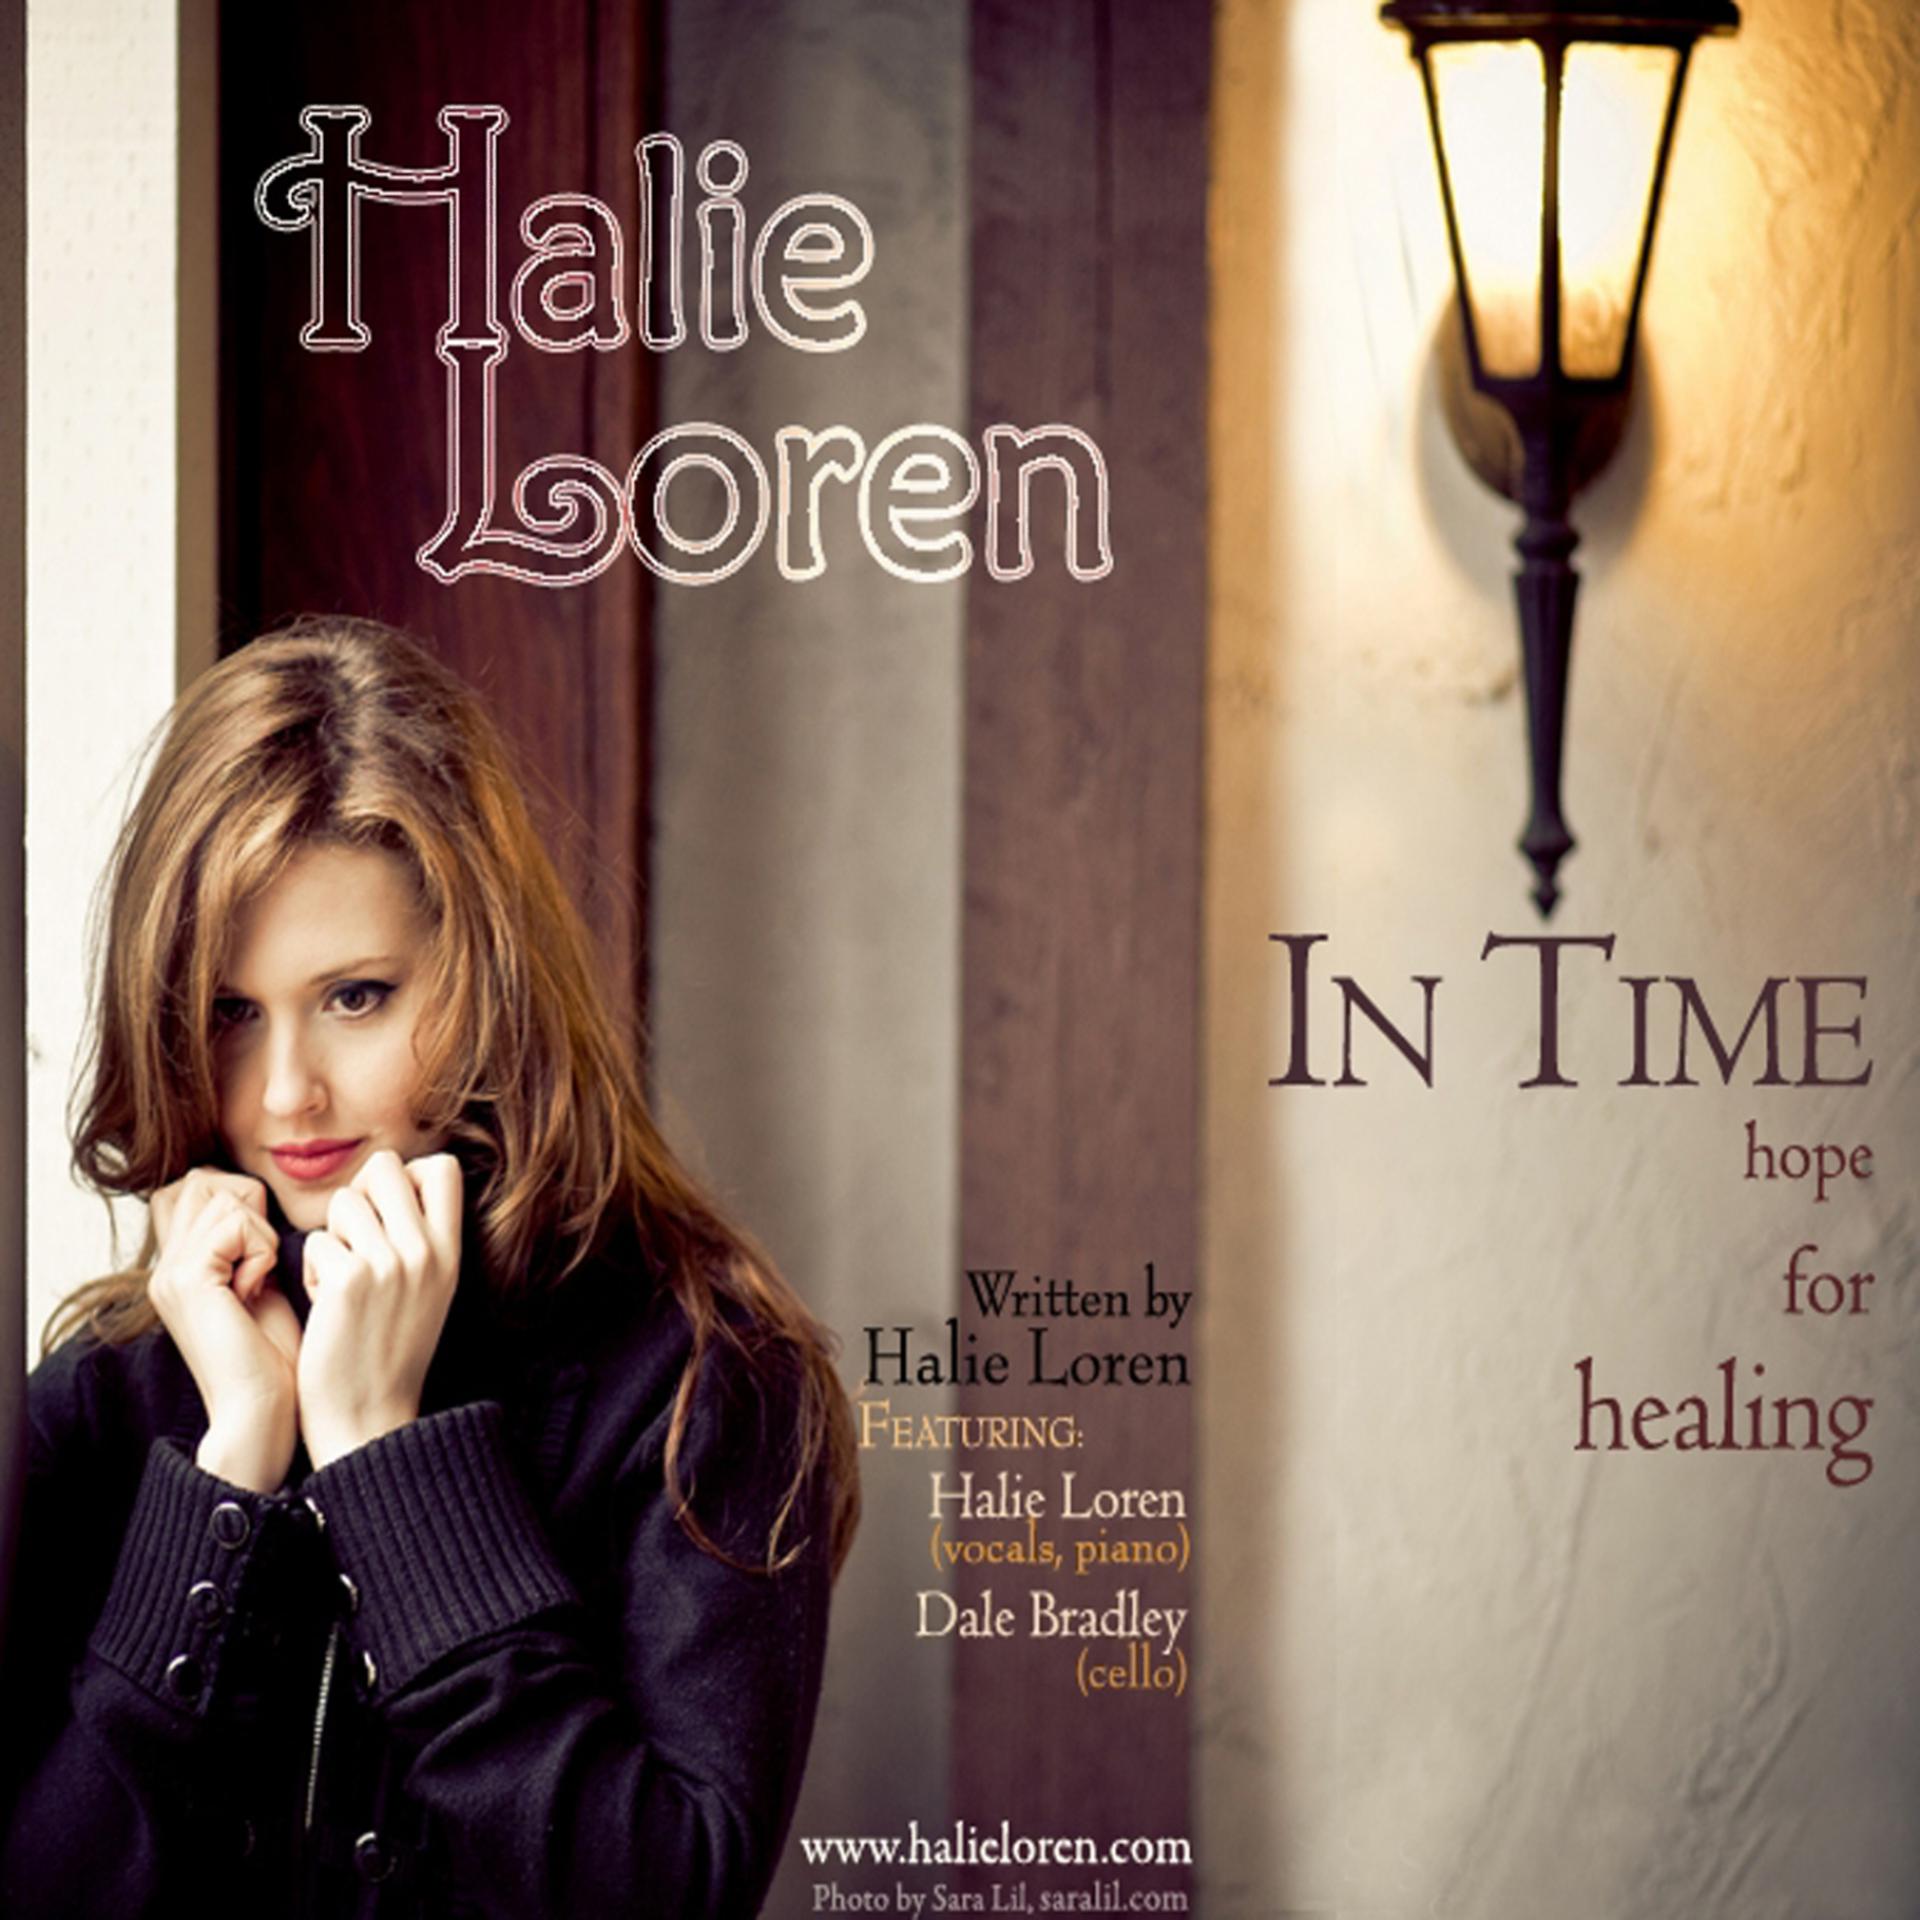 Halie Loren фото. Heal певица. Loren (musician). Hope время. New time hope